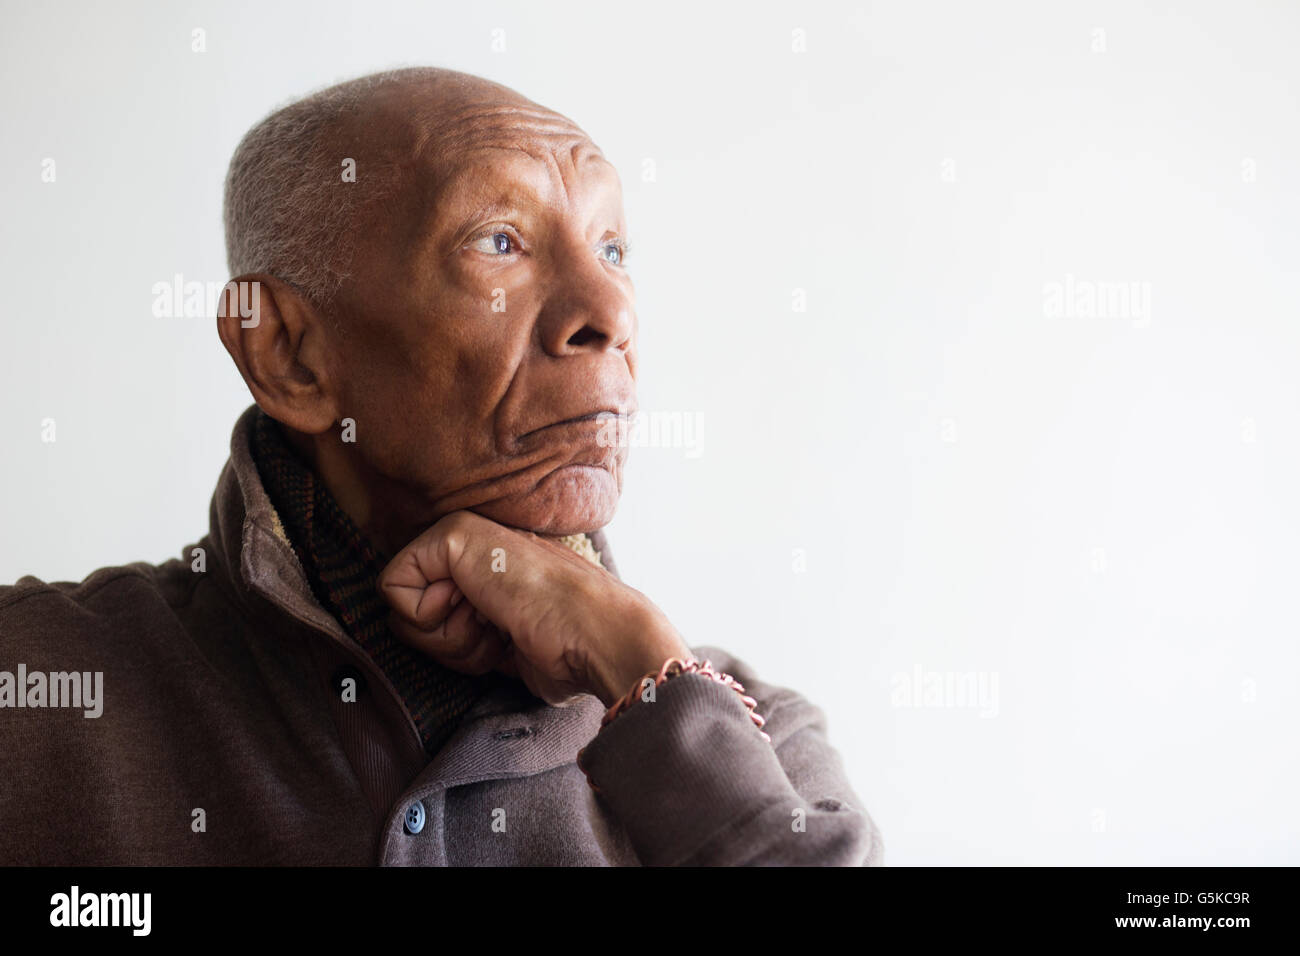 Older Black man resting chin in hand Stock Photo